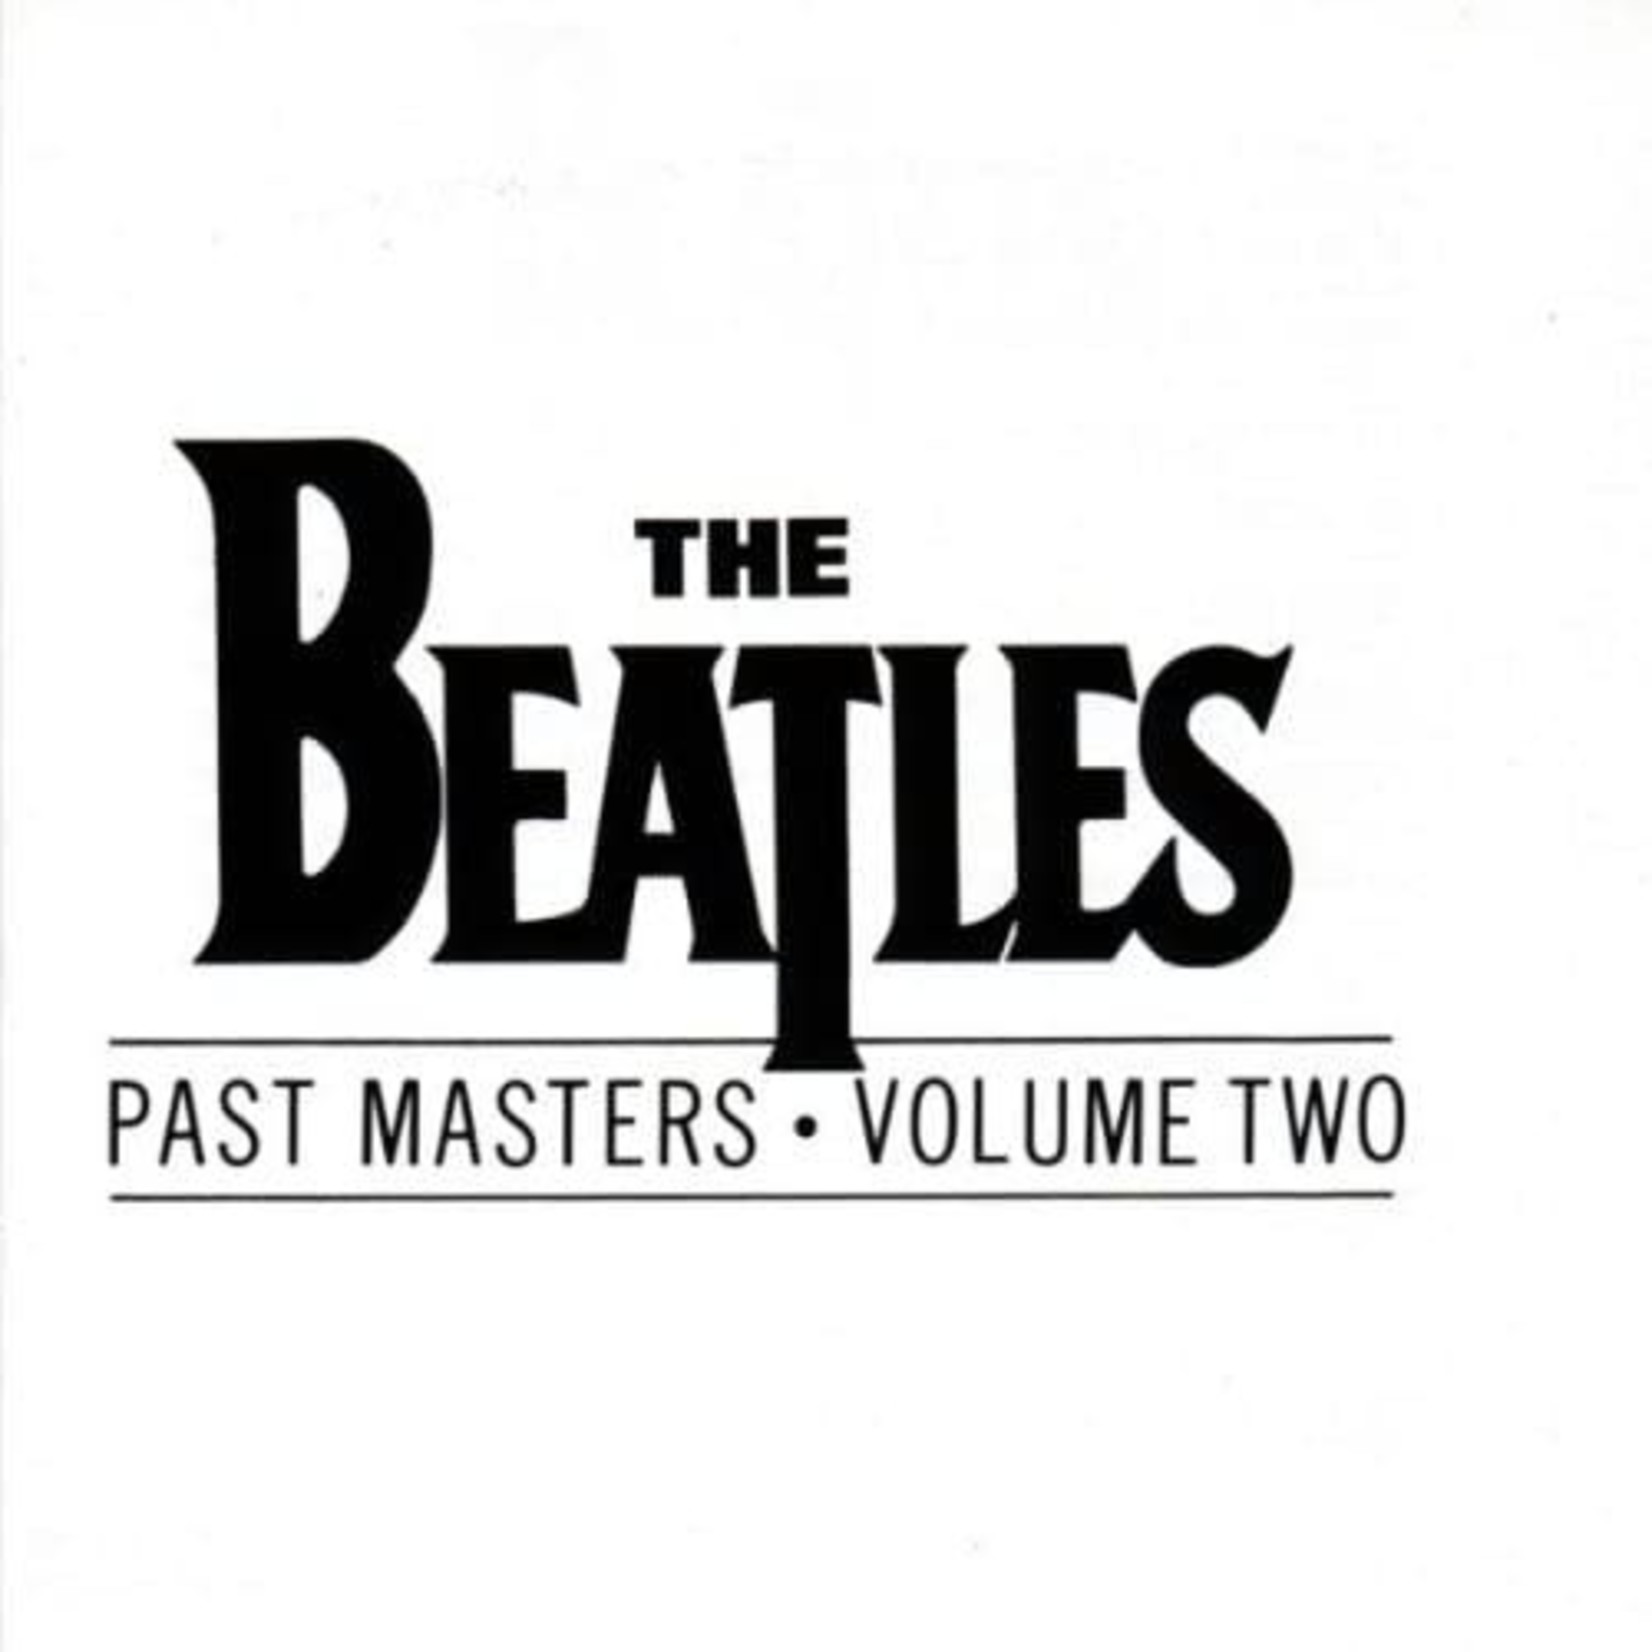 Beatles - Past Masters Vol. 2 [USED CD]